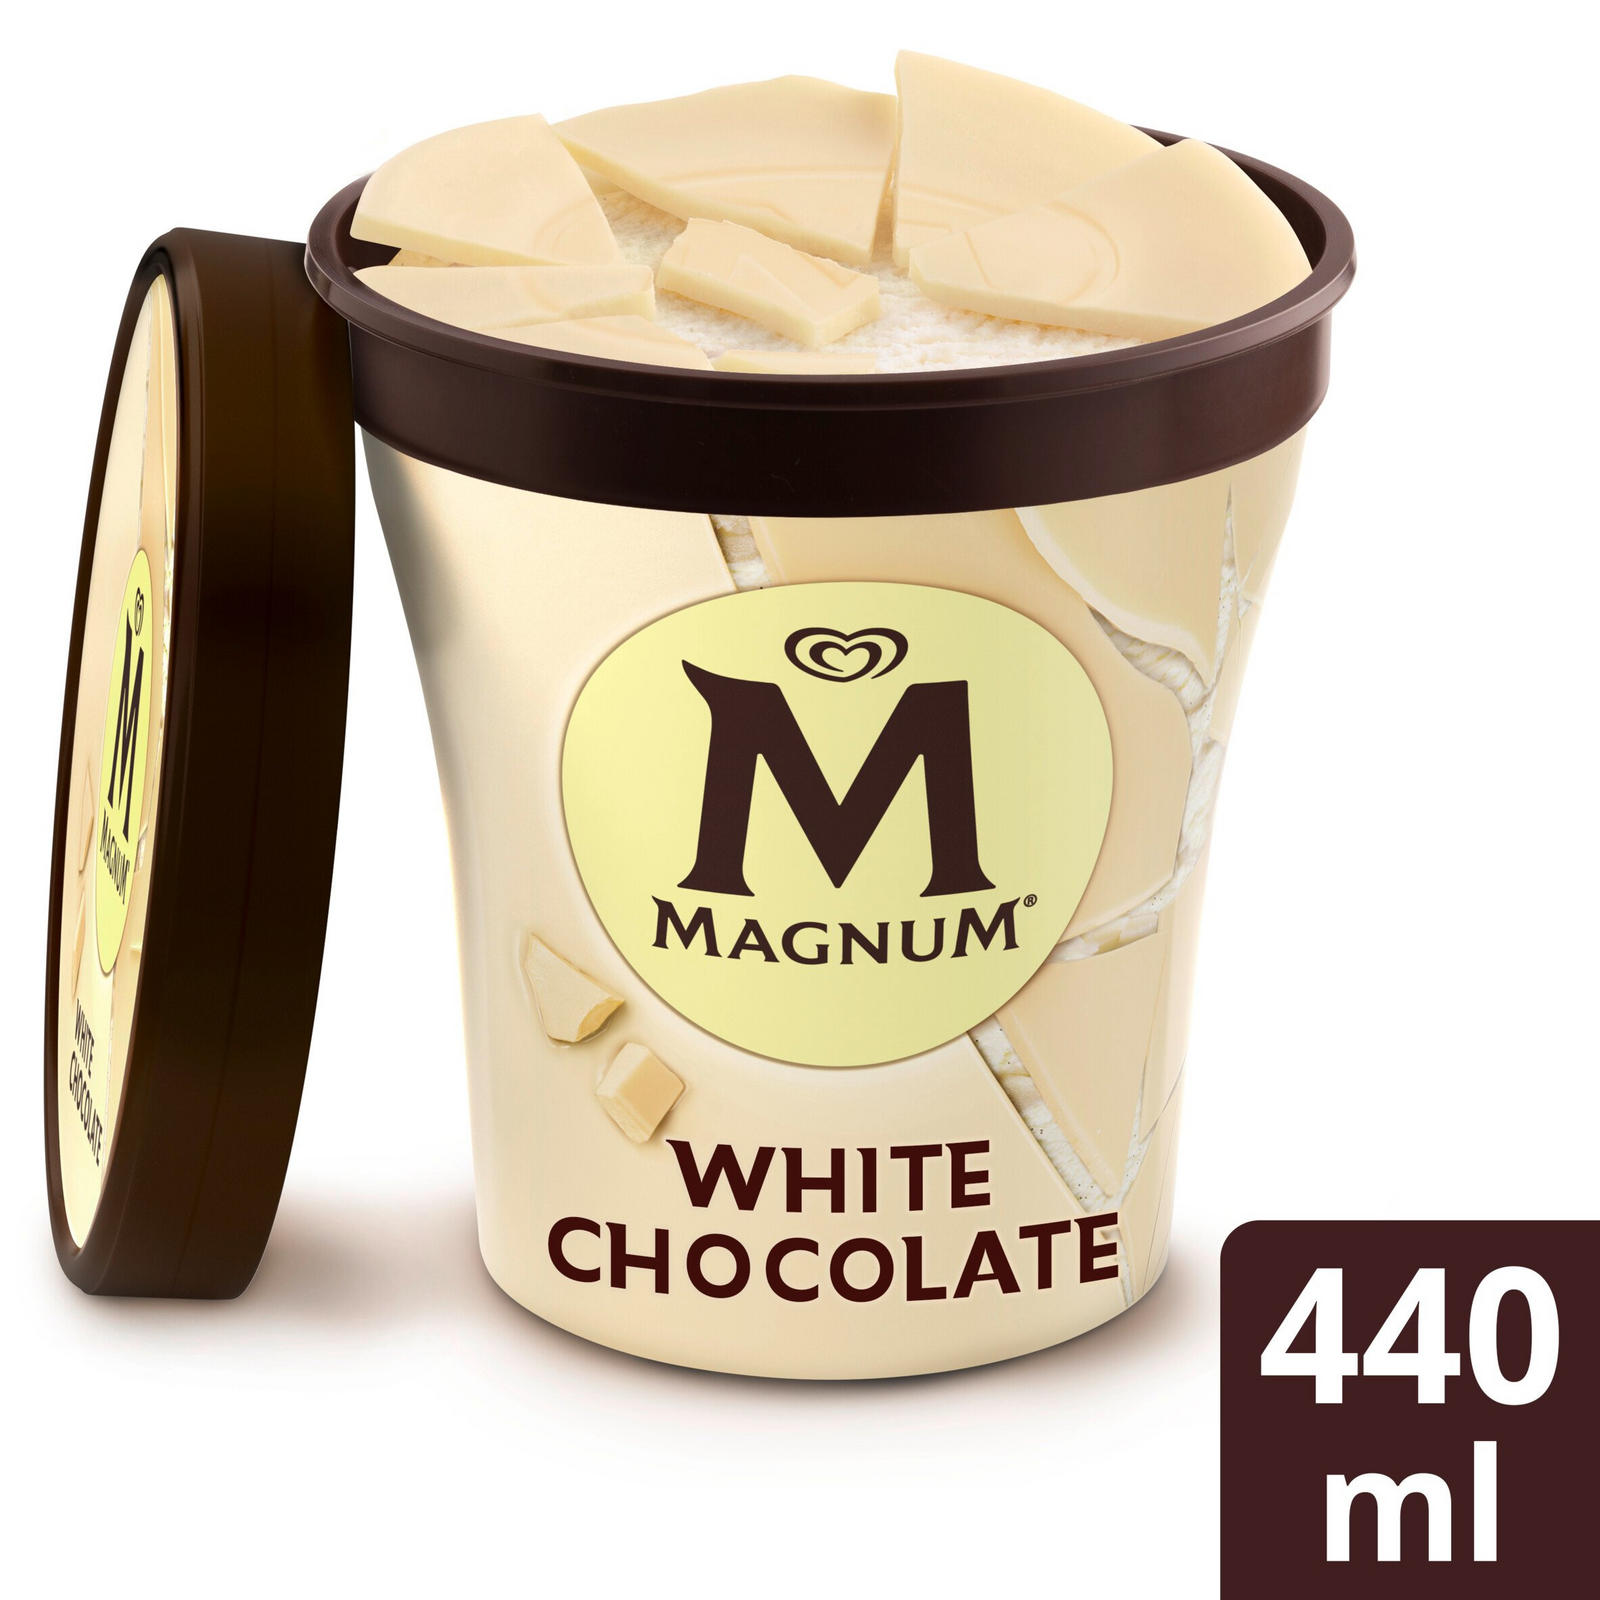 Magnum White Chocolate Tub - KibrisPDR